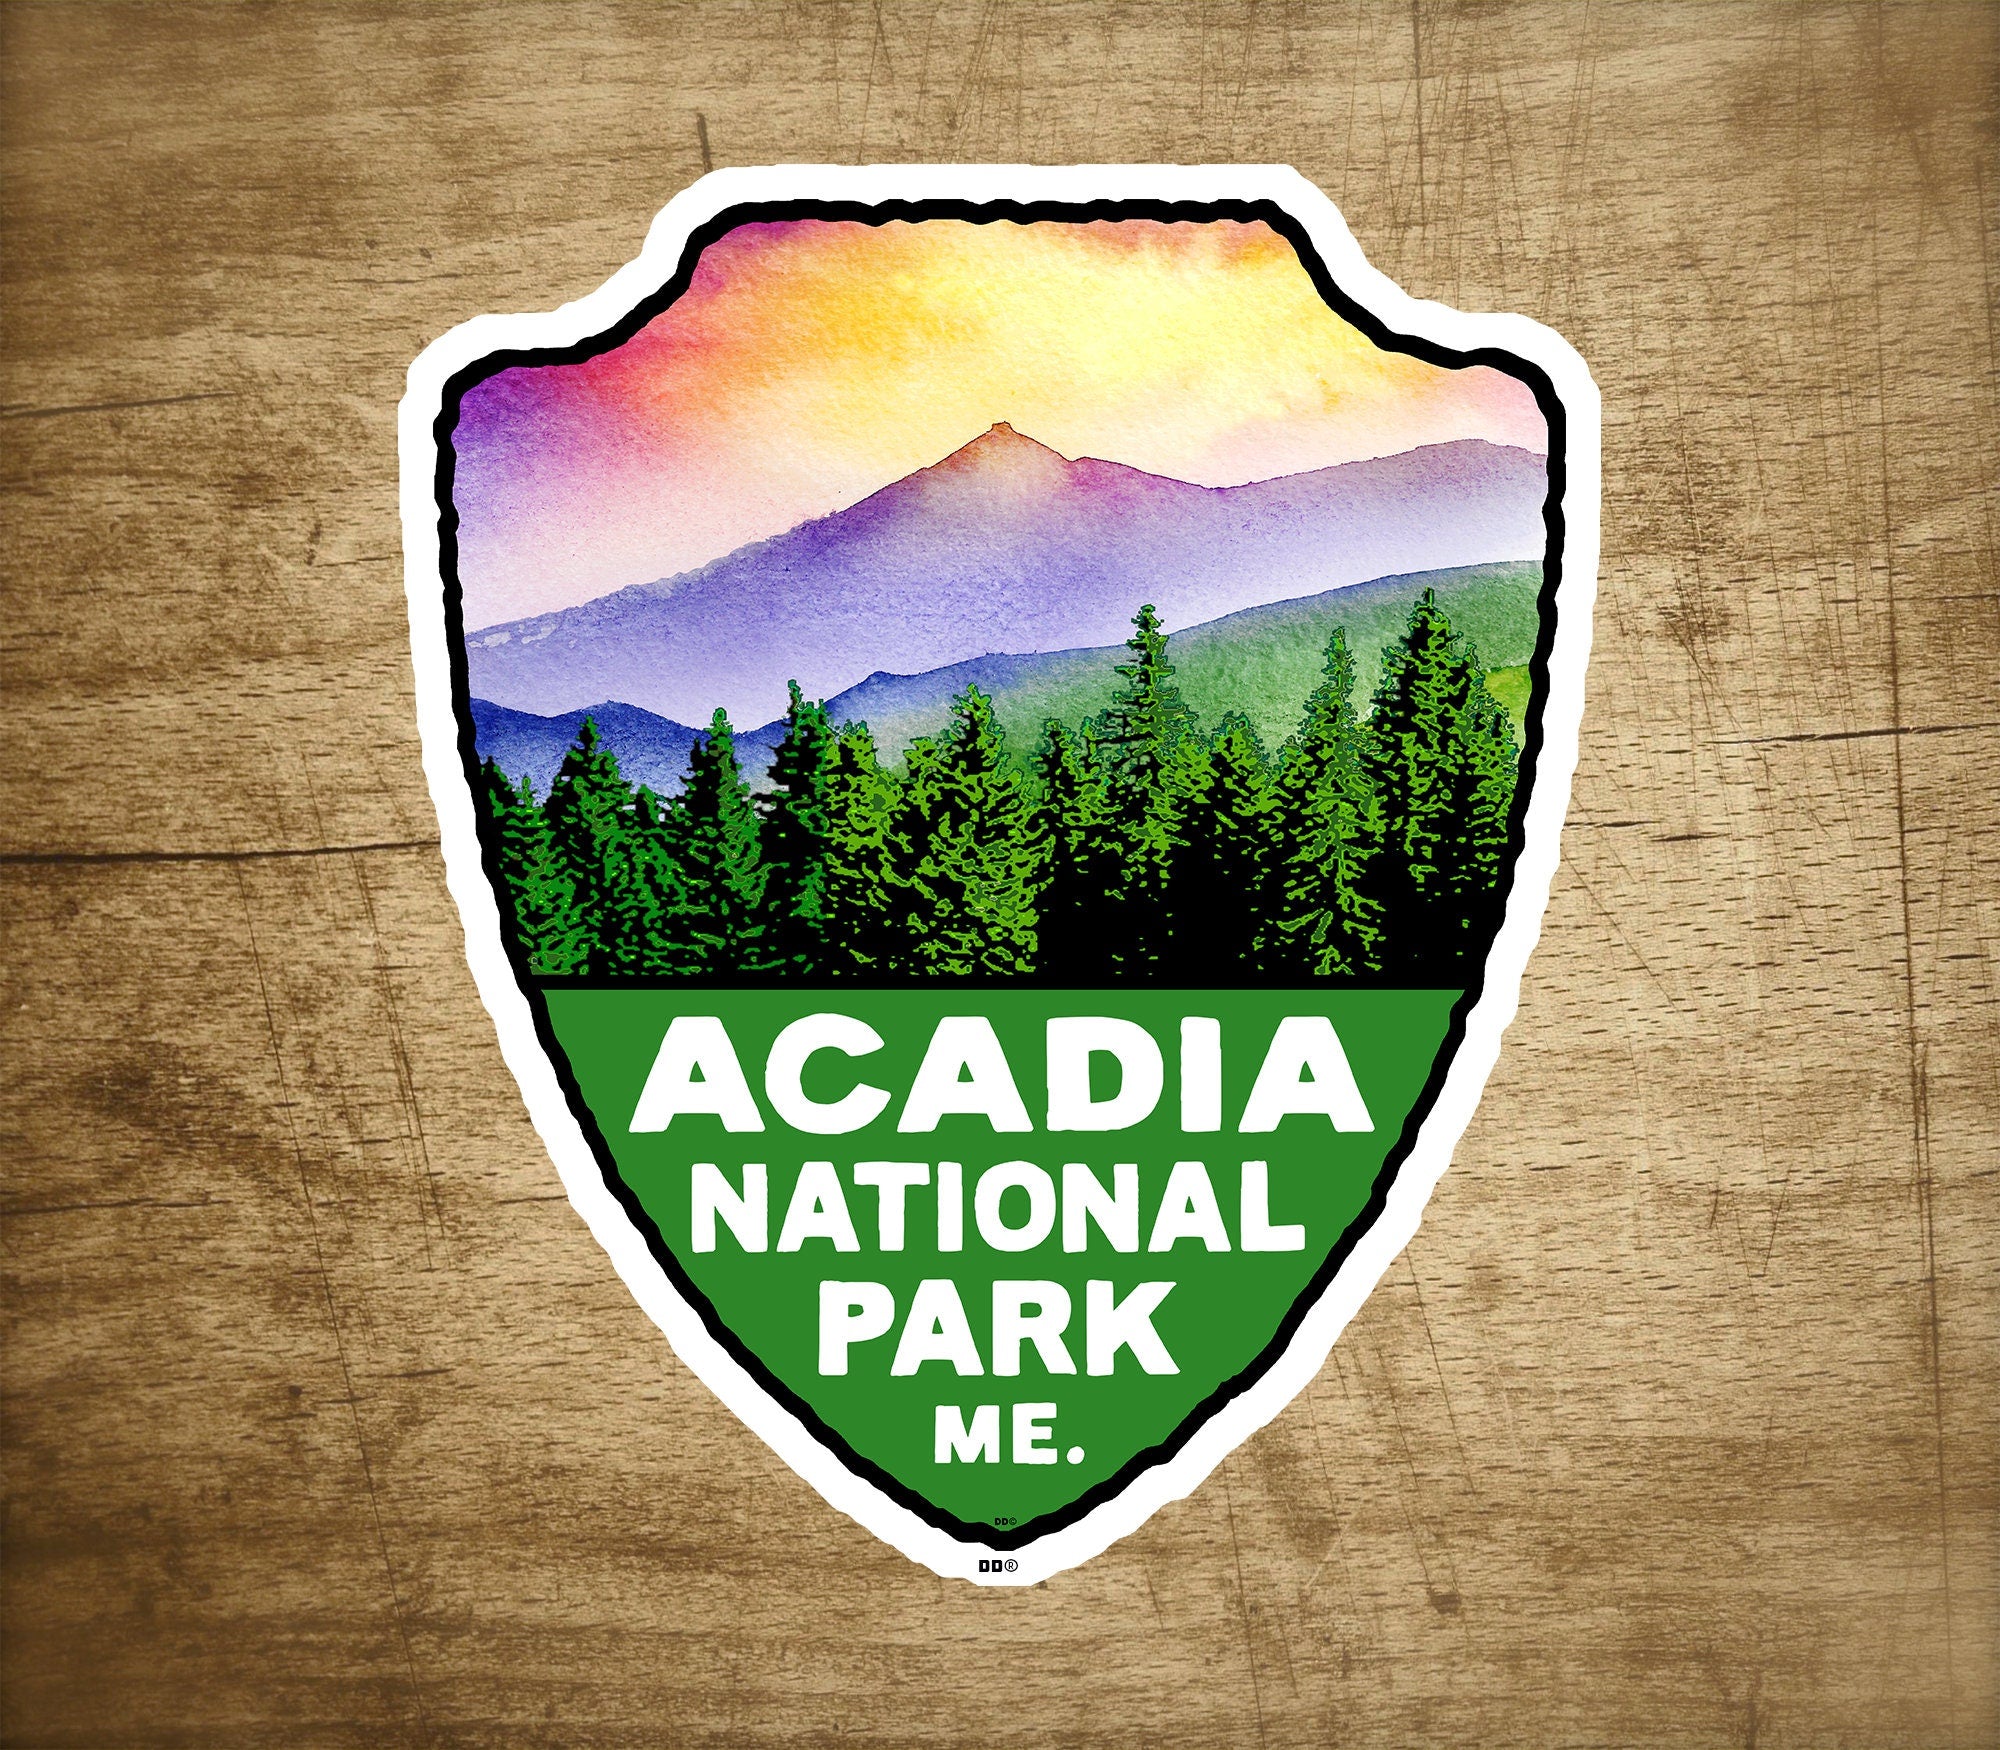 Acadia National Park Decal Sticker Vinyl 3.25" x 2.75" Maine Laptop Bumper